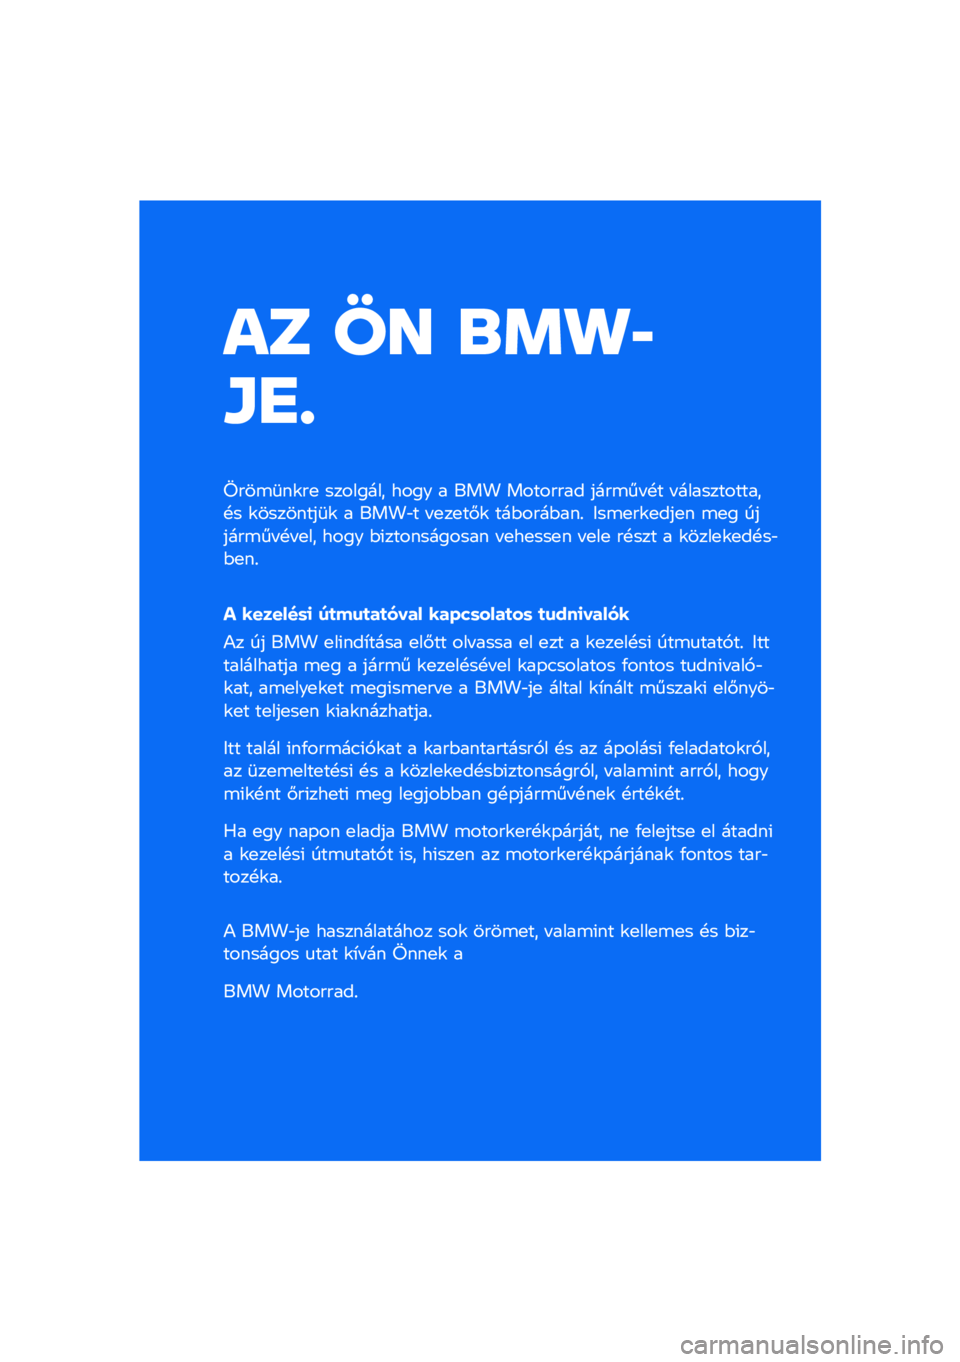 BMW MOTORRAD R NINE T 2021  Kezelési útmutató (in Hungarian) �� �� �\b�	�
�
�\f�
�
����\b�	��\f��
 �������� ���� � ��� �������� ����\b�� �!� � ������������!� �\f��������	�\f � ����"� � �
��
��#�\